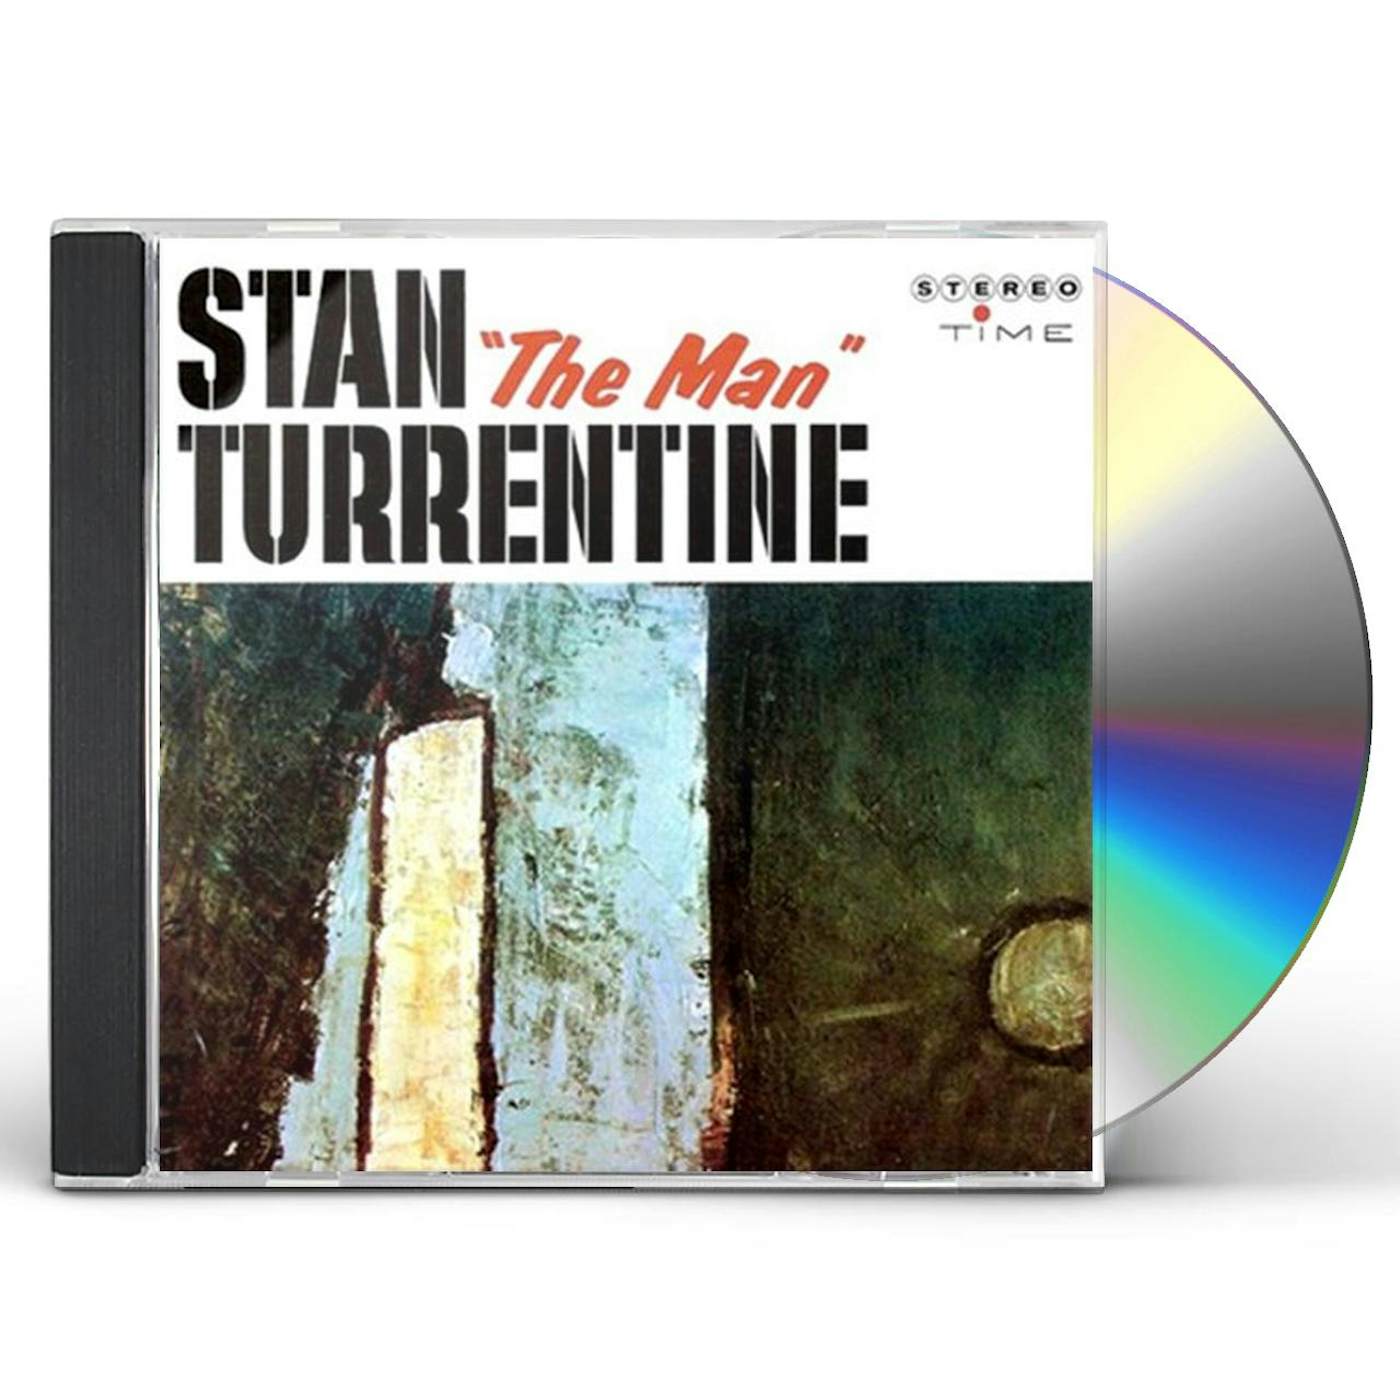 Stanley Turrentine STAN THE MAN TURRENTINE CD